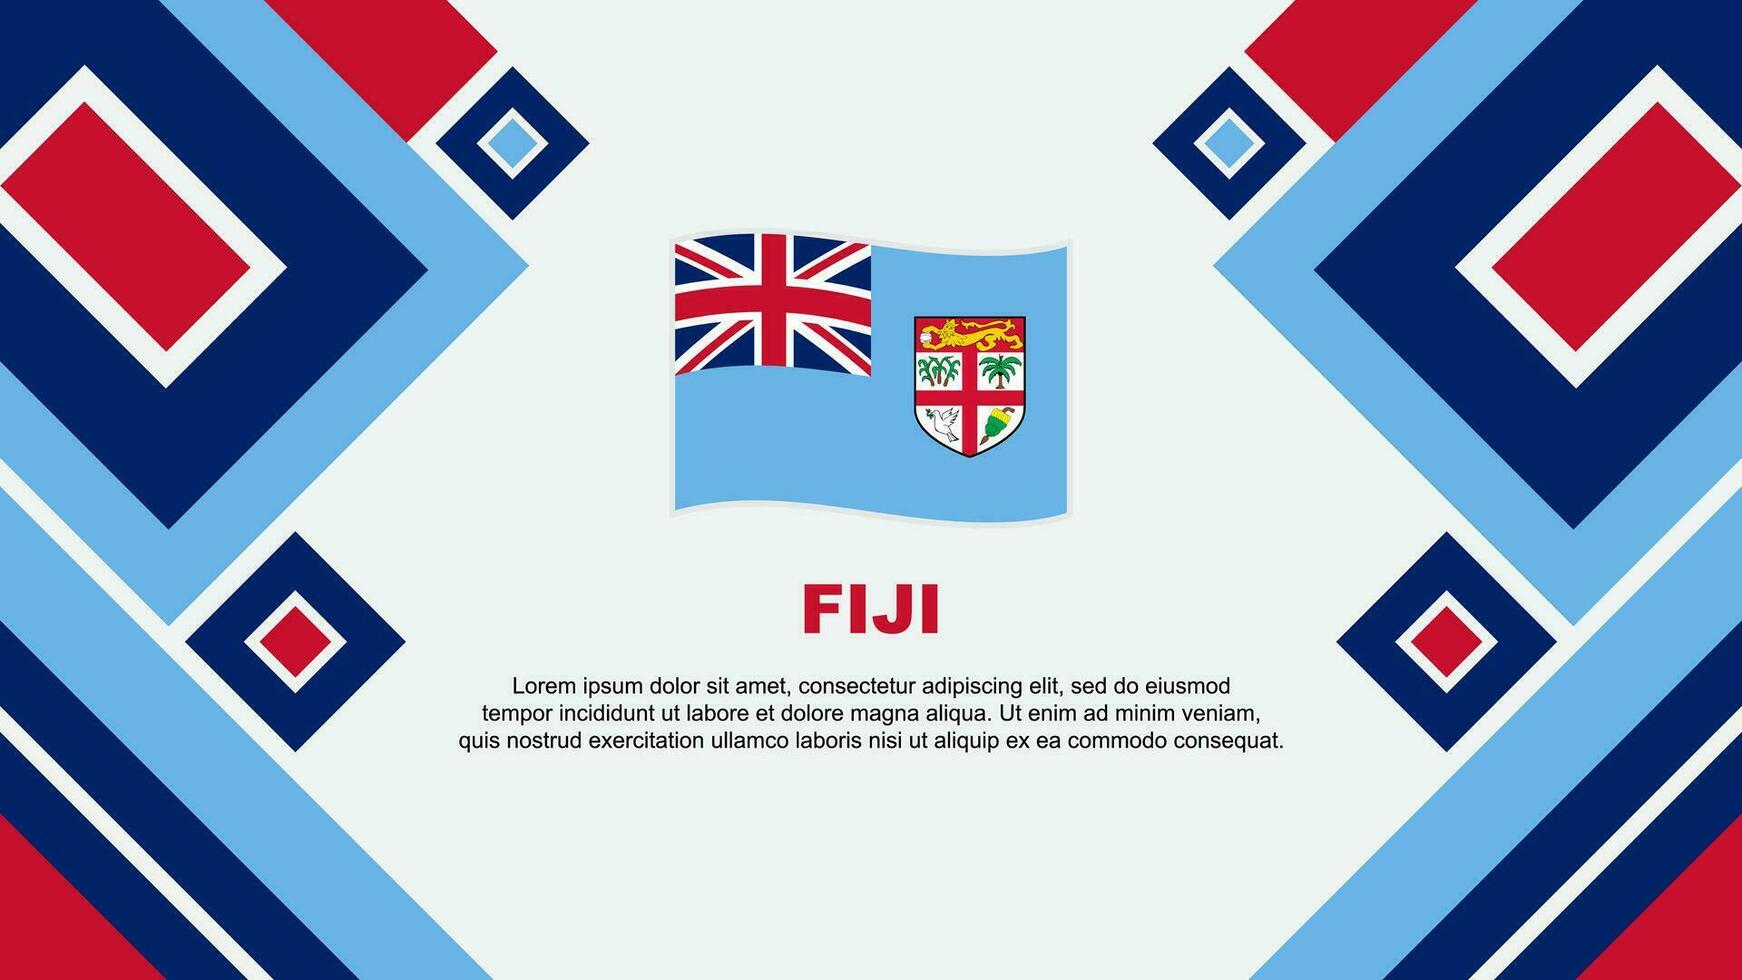 Fiji Flag Abstract Background Design Template. Fiji Independence Day Banner Wallpaper Vector Illustration. Fiji Cartoon